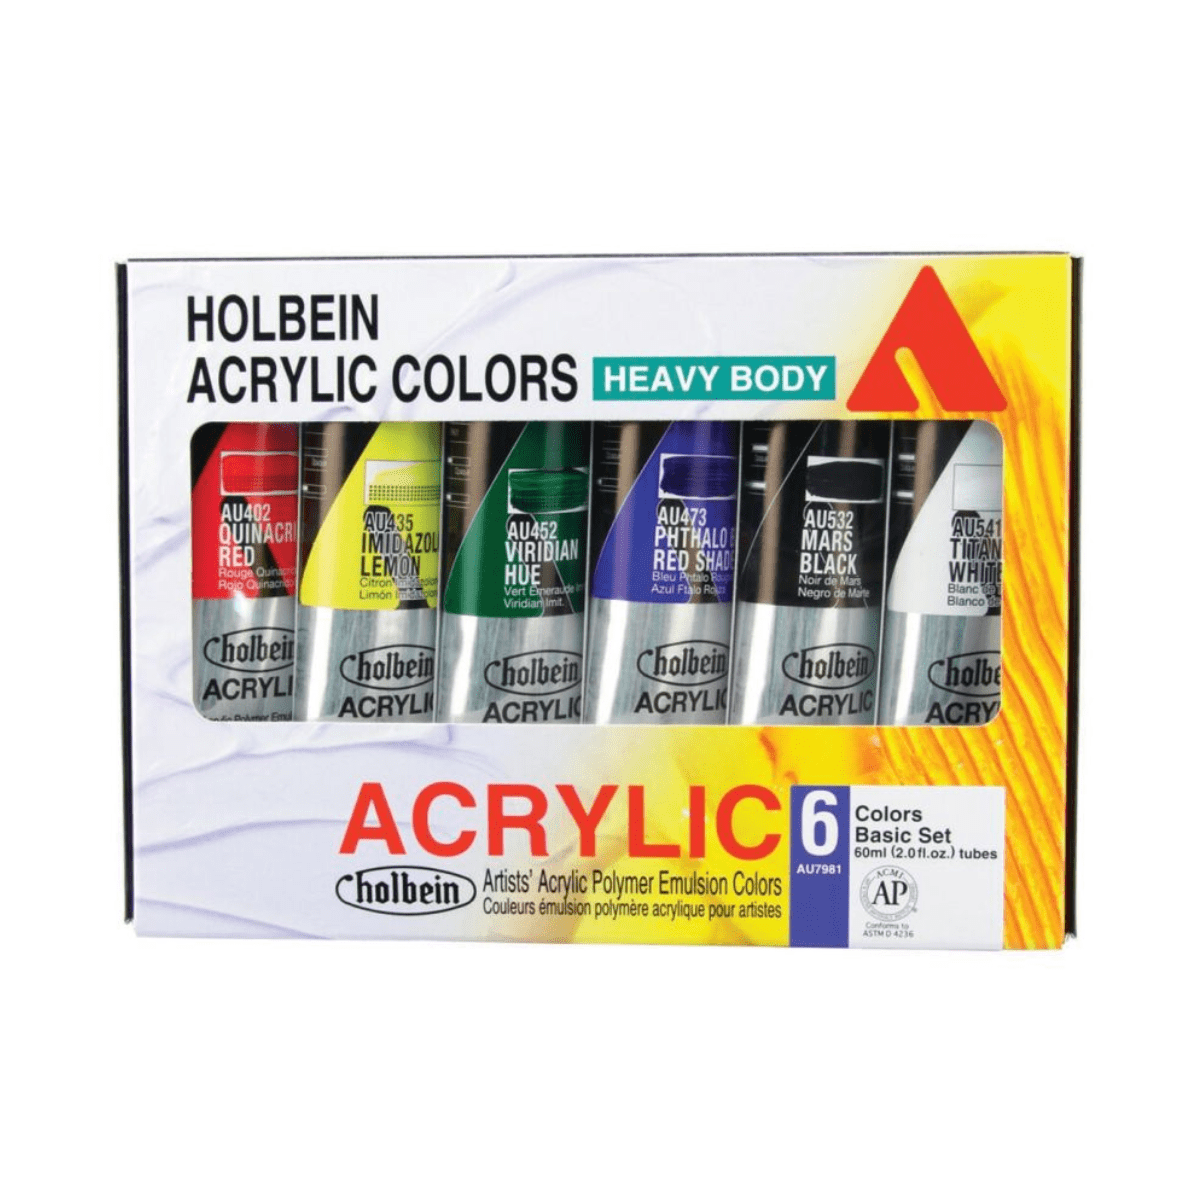 HOLBEIN ACRYLIC PAINT SET Holbein - Heavy Body Acrylic Paint - Set of 6 Basic Colours - 60mL Tubes - Item #AU7981